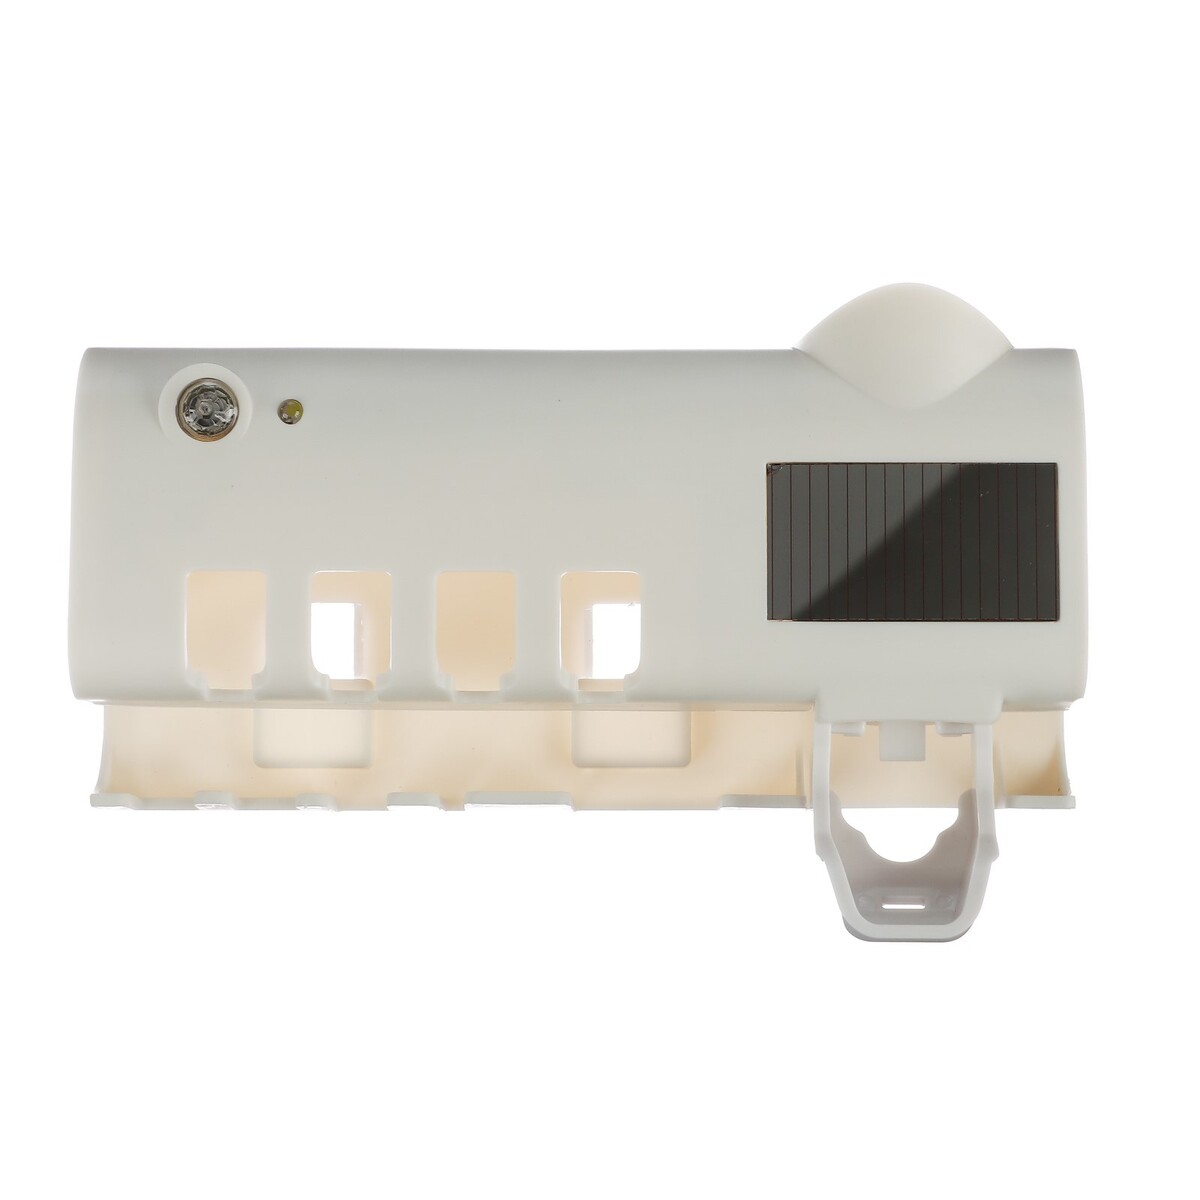 Портативный стерилизатор для зубных щеток lgs-08, 2000 ма/ч, акб, белый стакан для зубных щеток 6 9х6 9х12 1 см керамика белый ромбы ce2901aa tbh